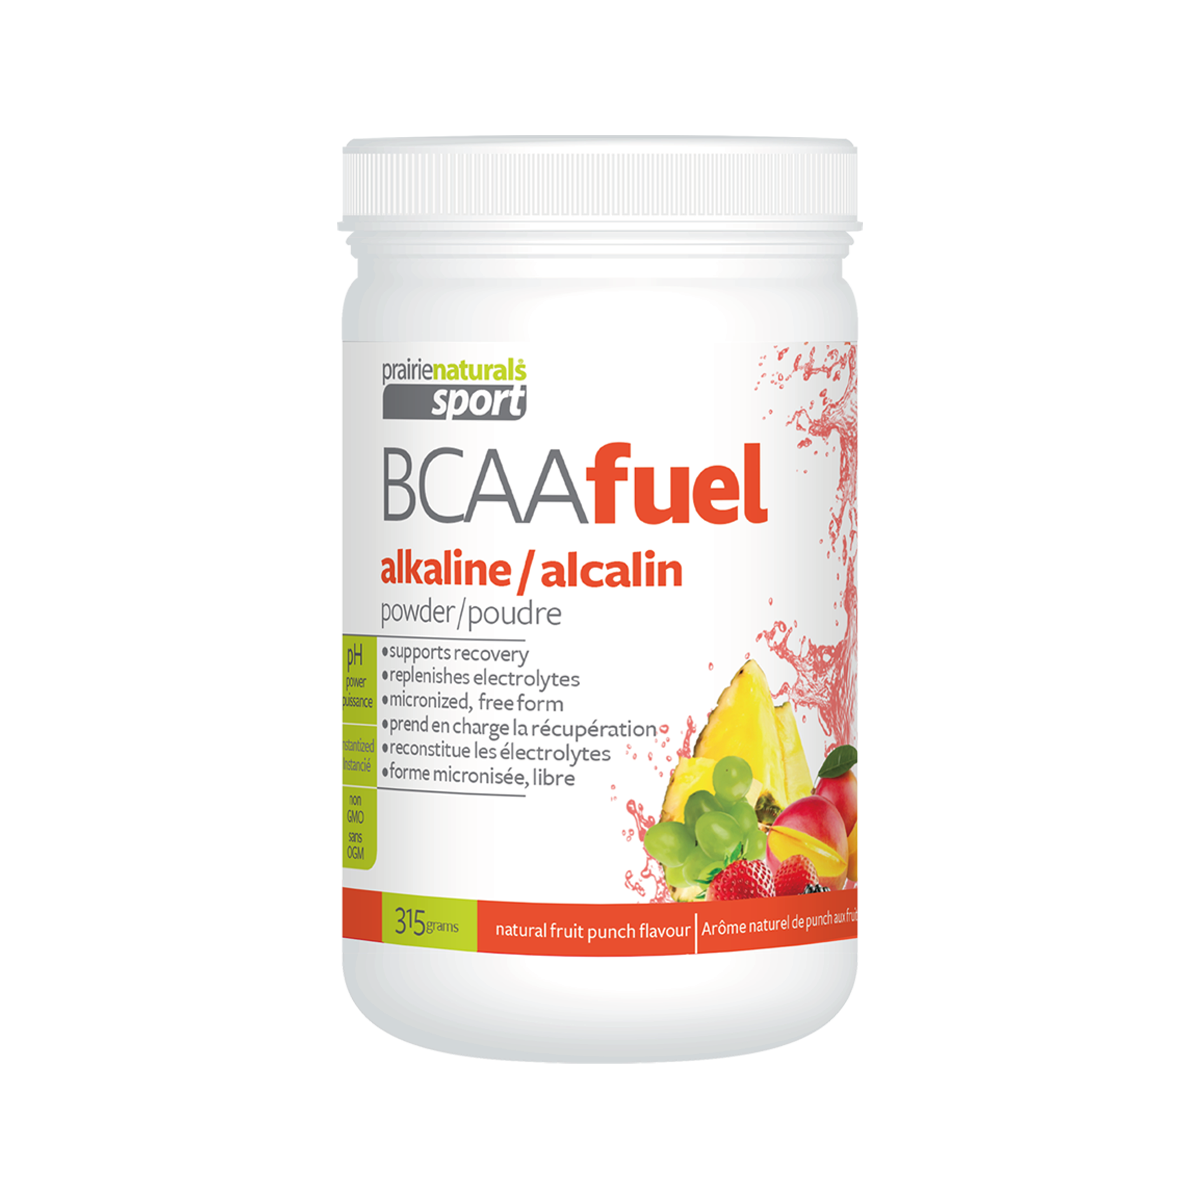 Prairie Naturals Fuel Alkalinized BCAA - Natural fruit punch flavour 支鏈氨基酸（雜果賓治味）315g 有助運動後回復體力，舒緩肌肉損耗疲勞酸痛，有助於運動後增肌減體脂 Exp:2024/06